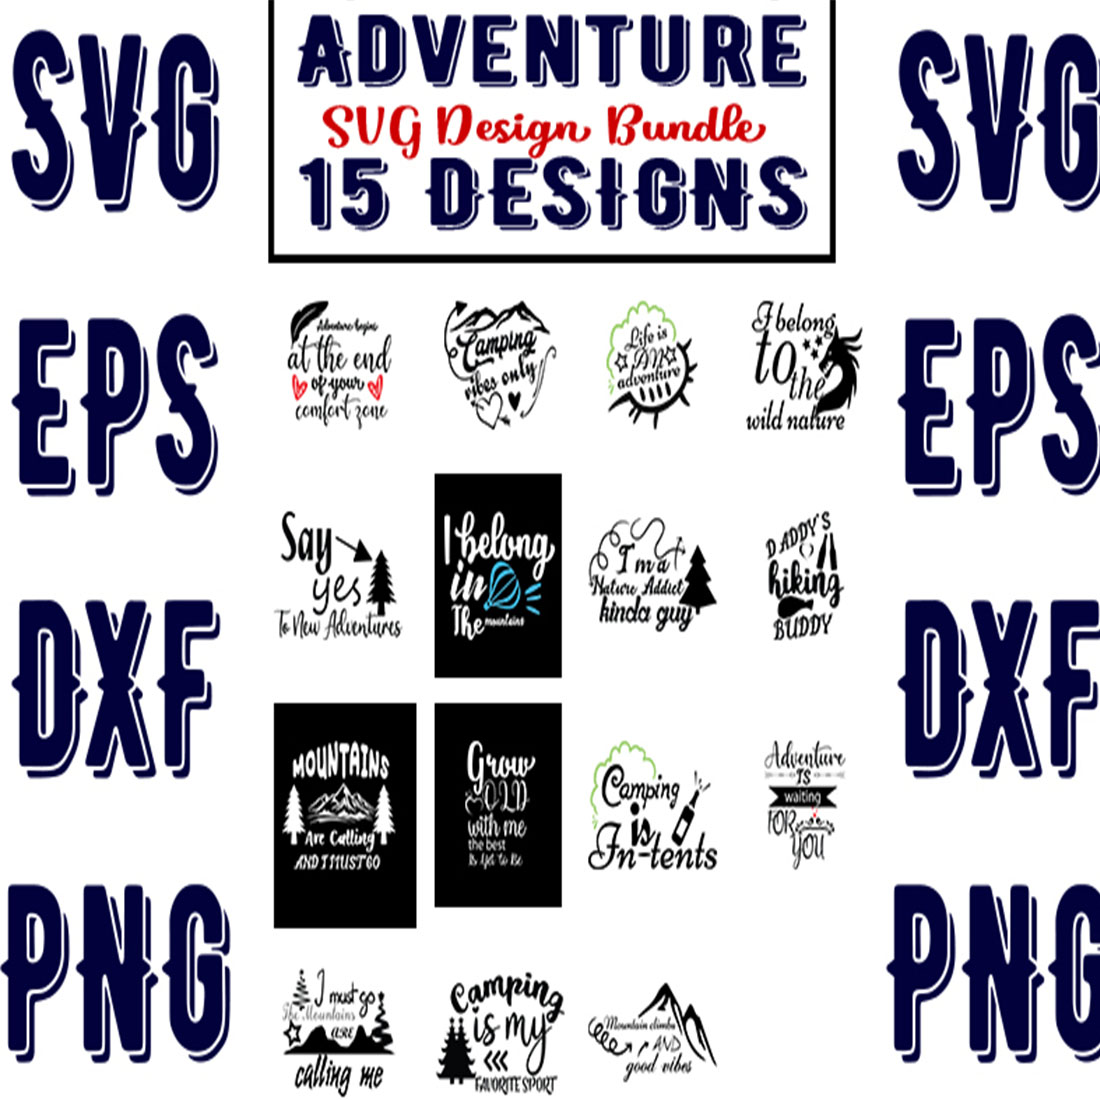 The adventure svg design bundle includes 15 designs.